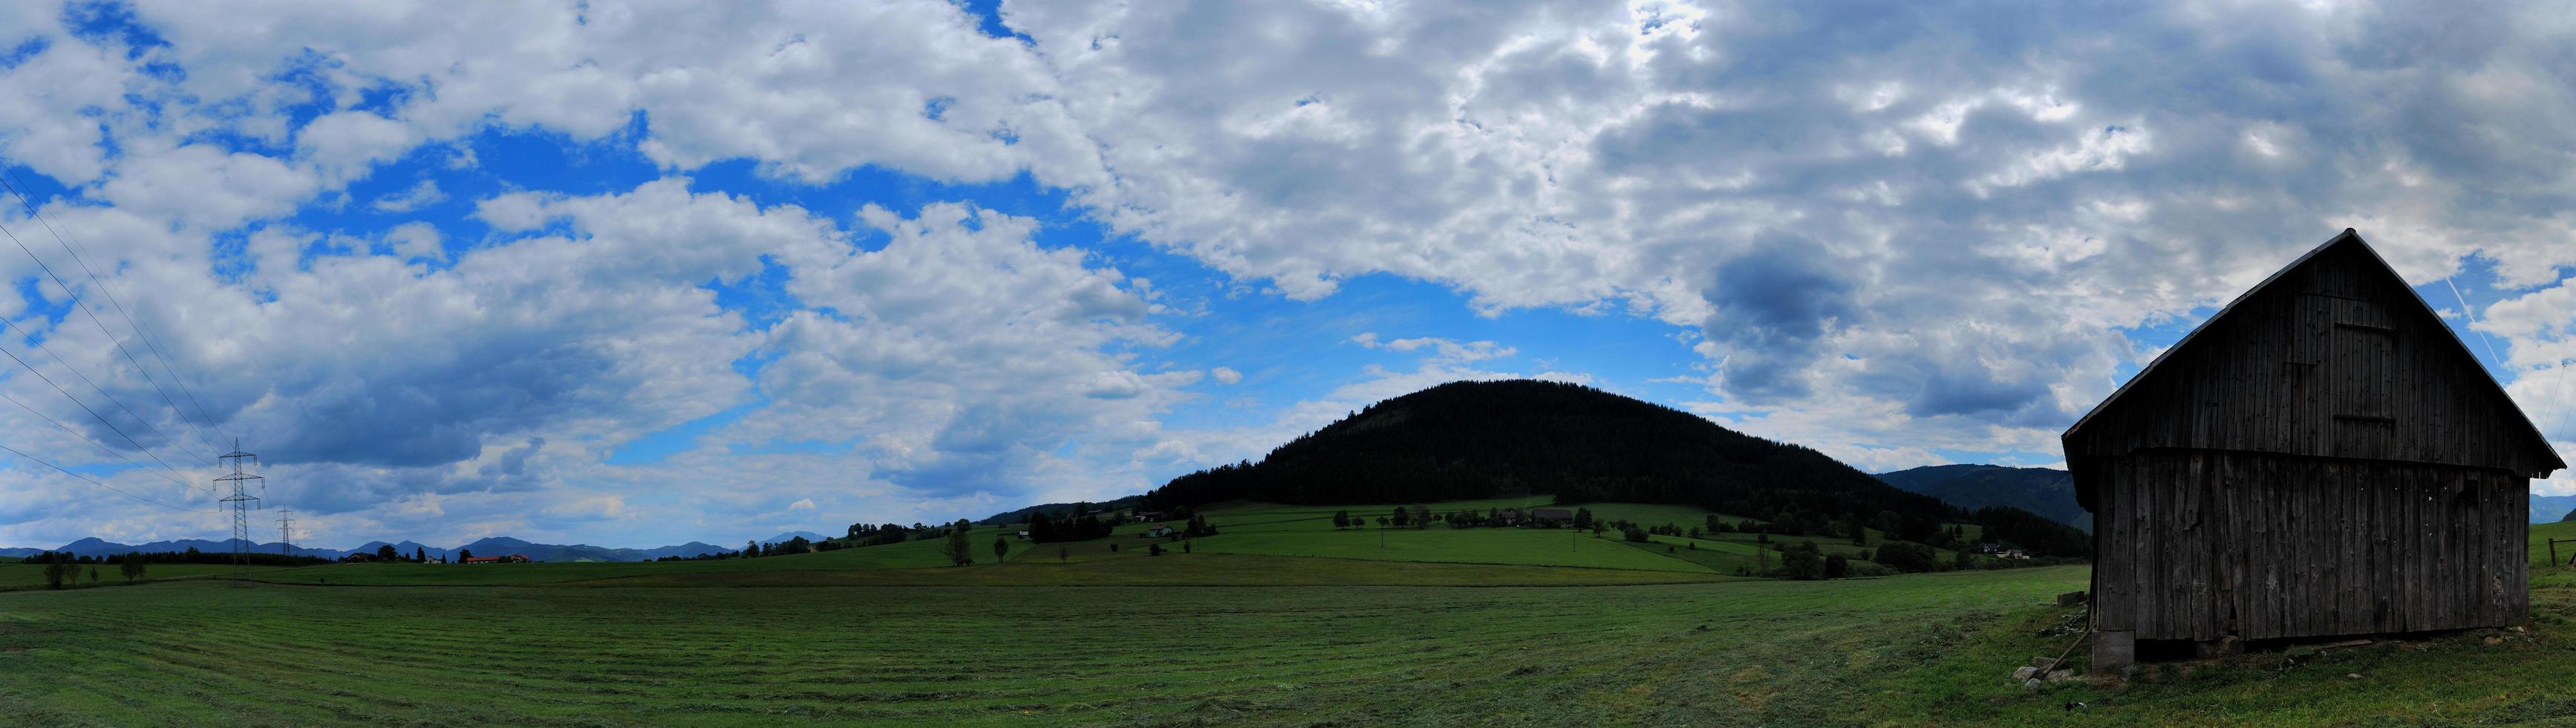 alm landschaft panorama photo